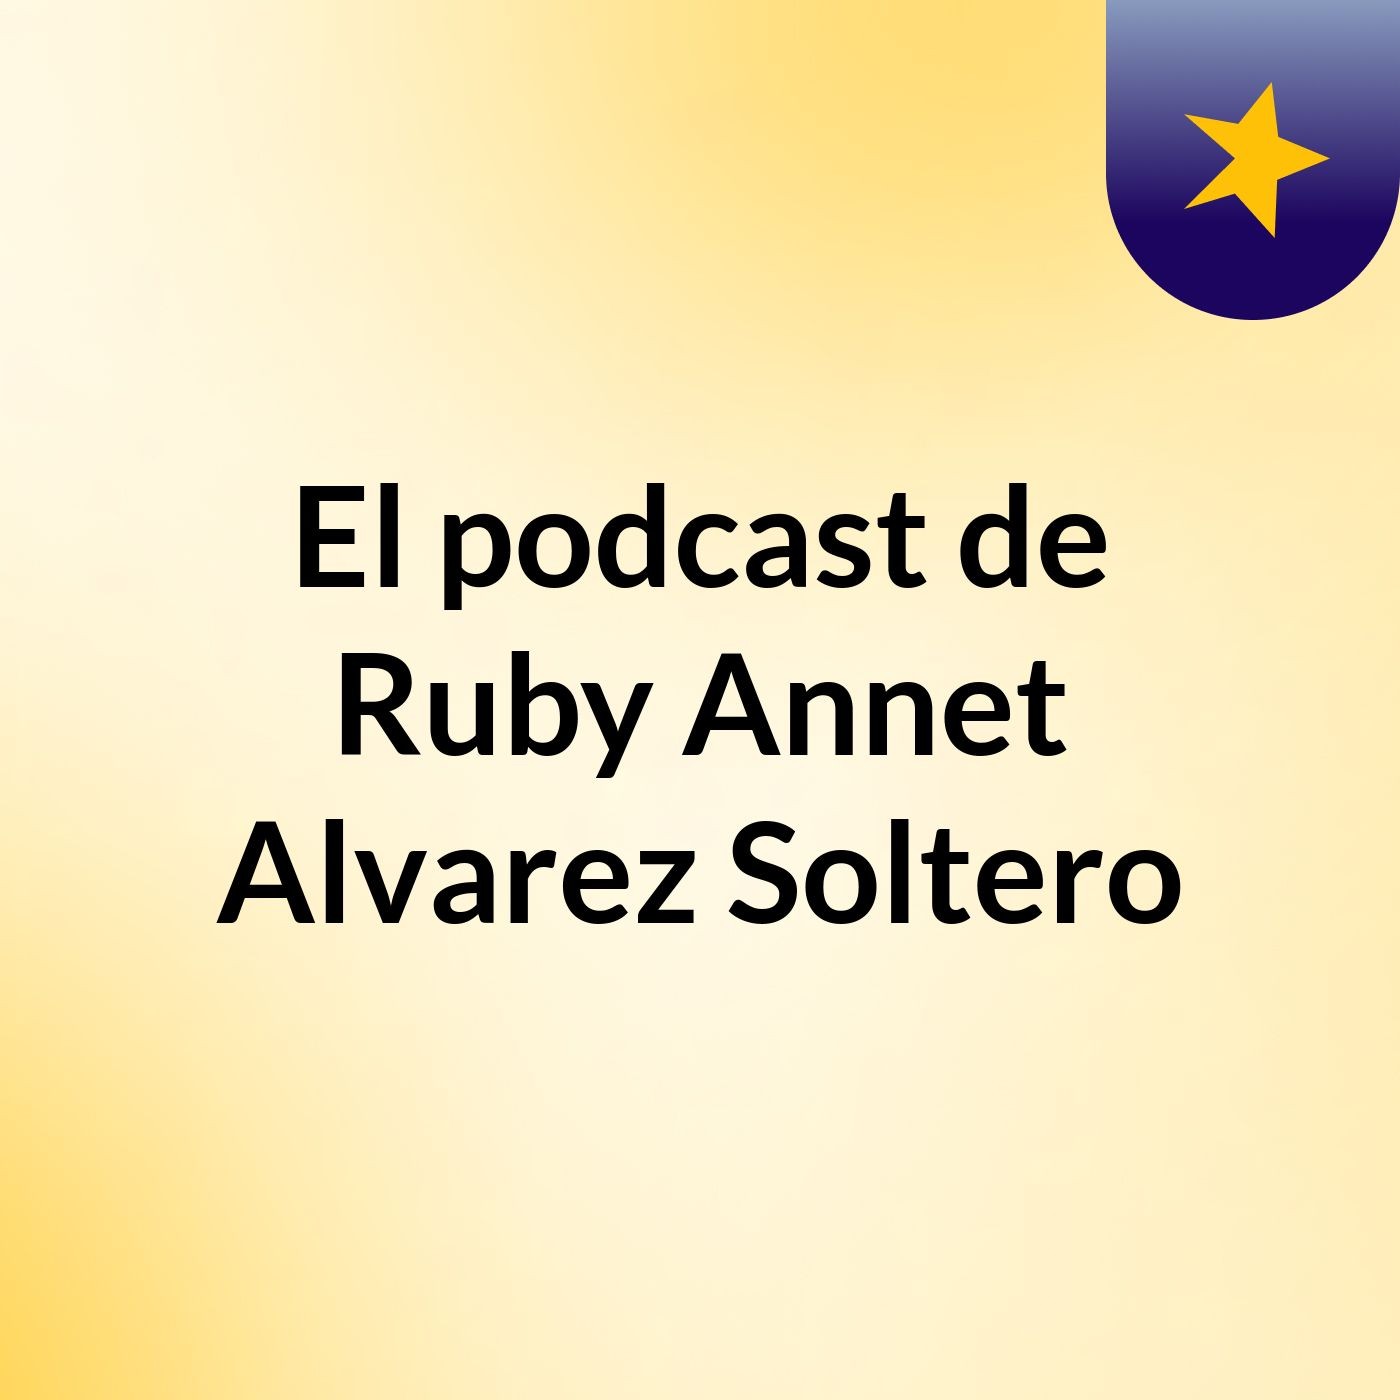 El podcast de Ruby Annet Alvarez Soltero